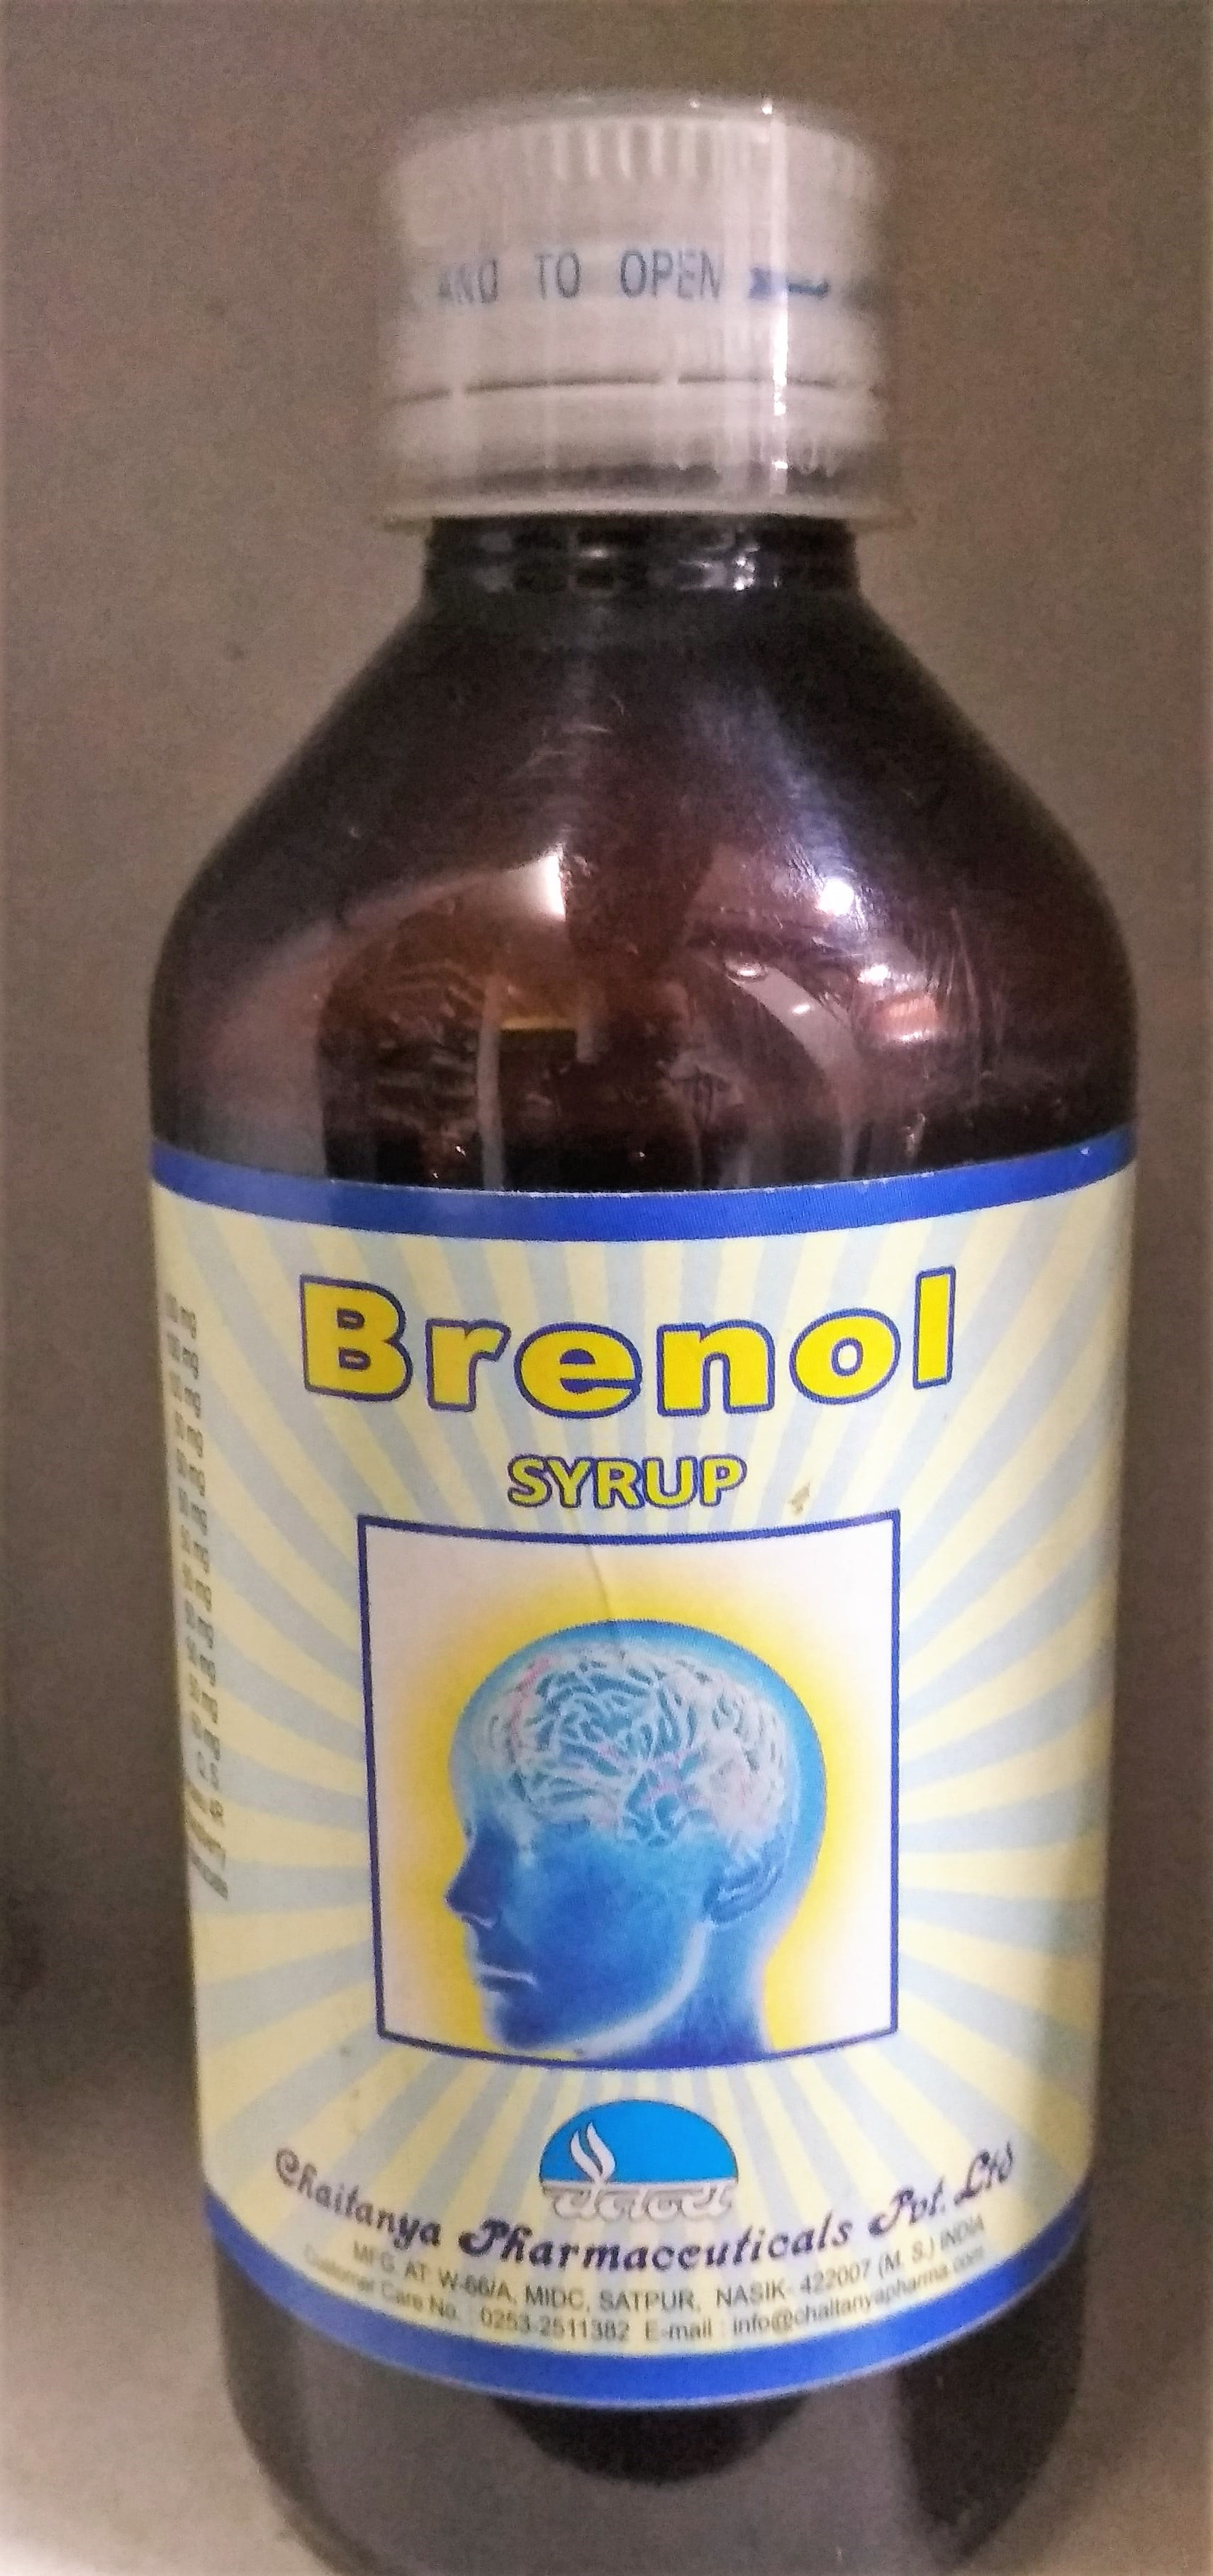 brenol syrup 200 ml ambius syrup chaitanya pharmaceuticals